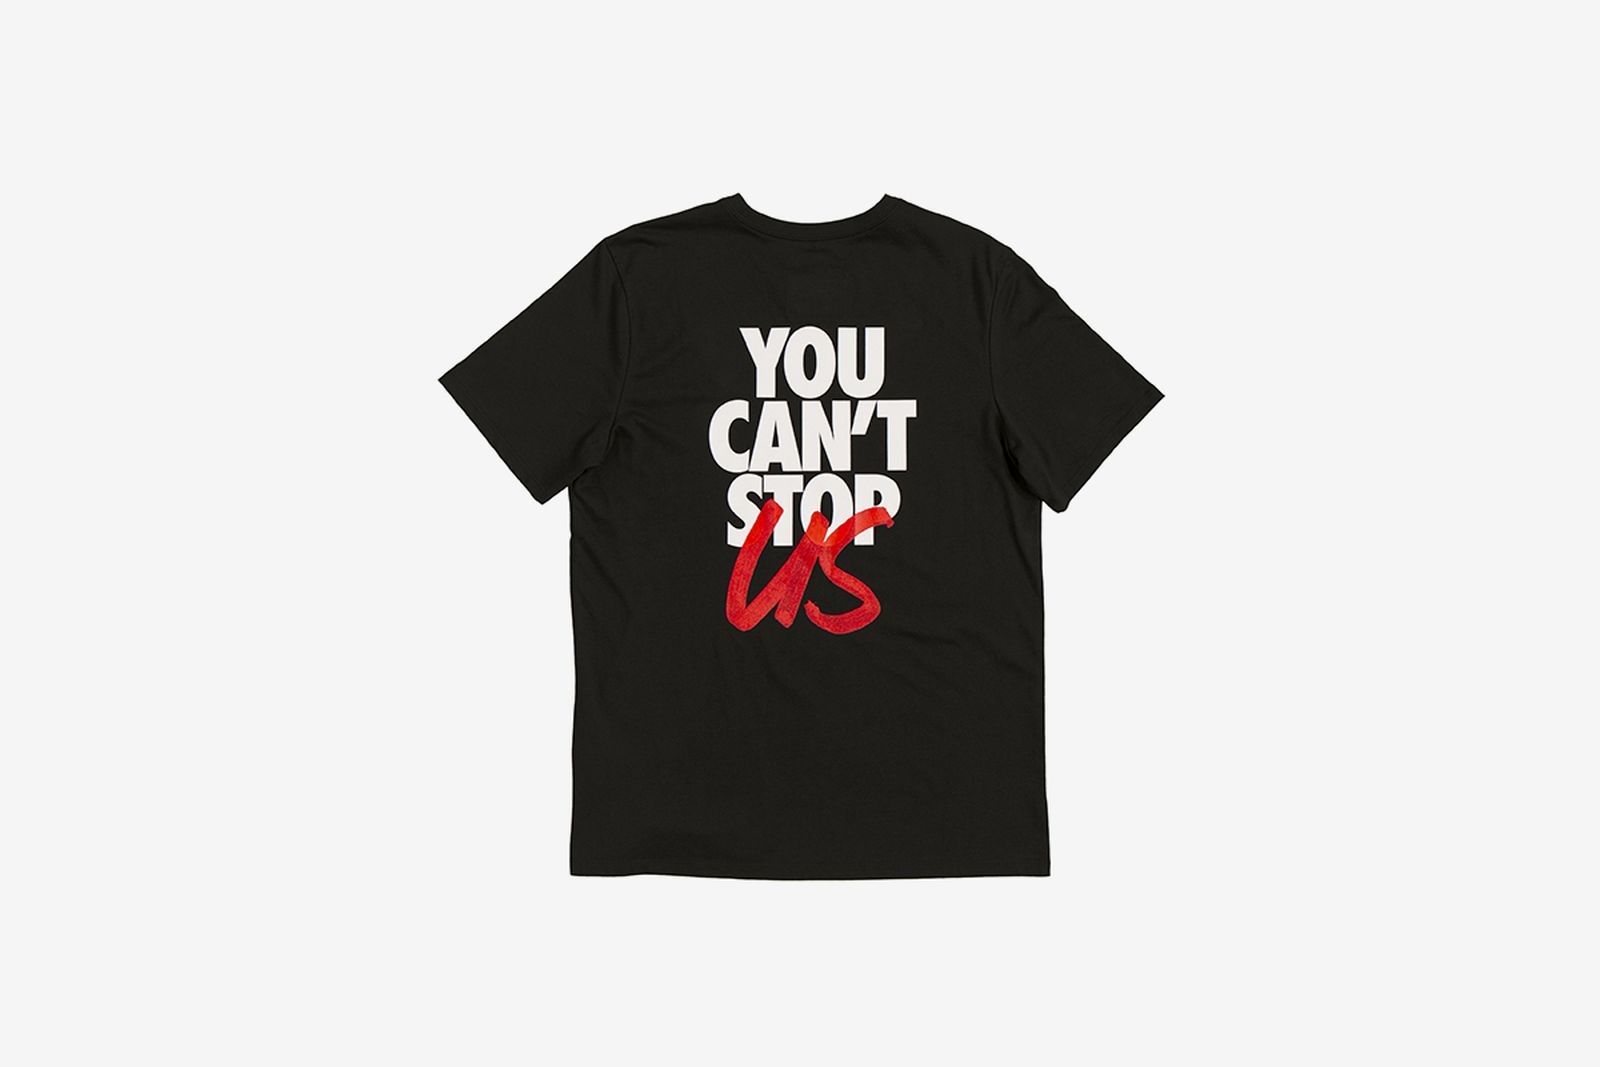 sacai x Nike “You Can’t Stop Us” apparel